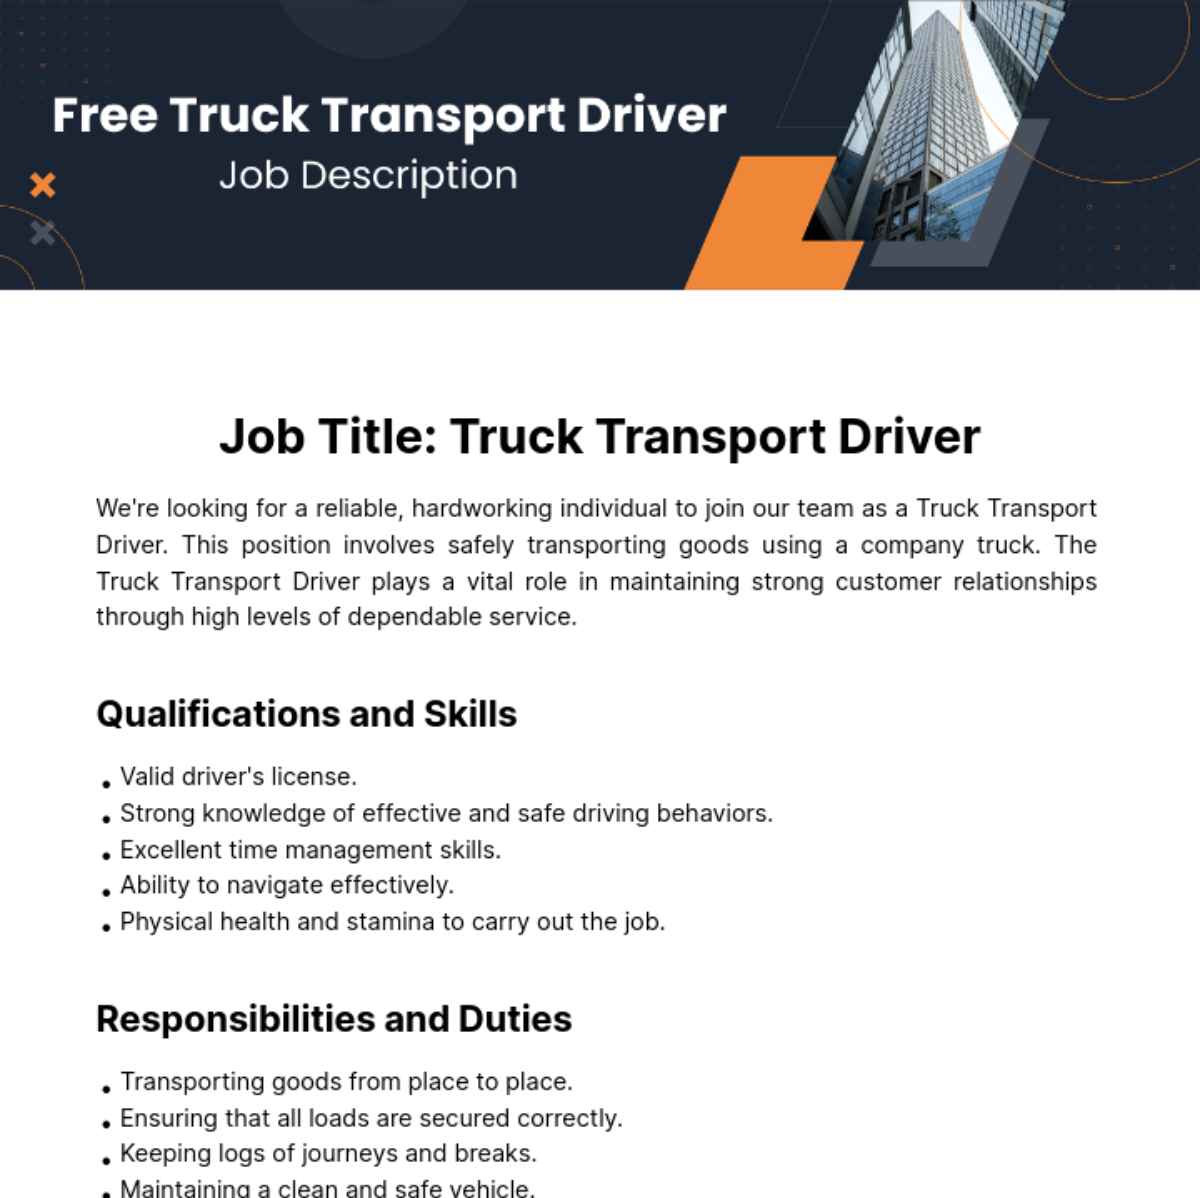 Free Truck Transport Driver Job Description Template